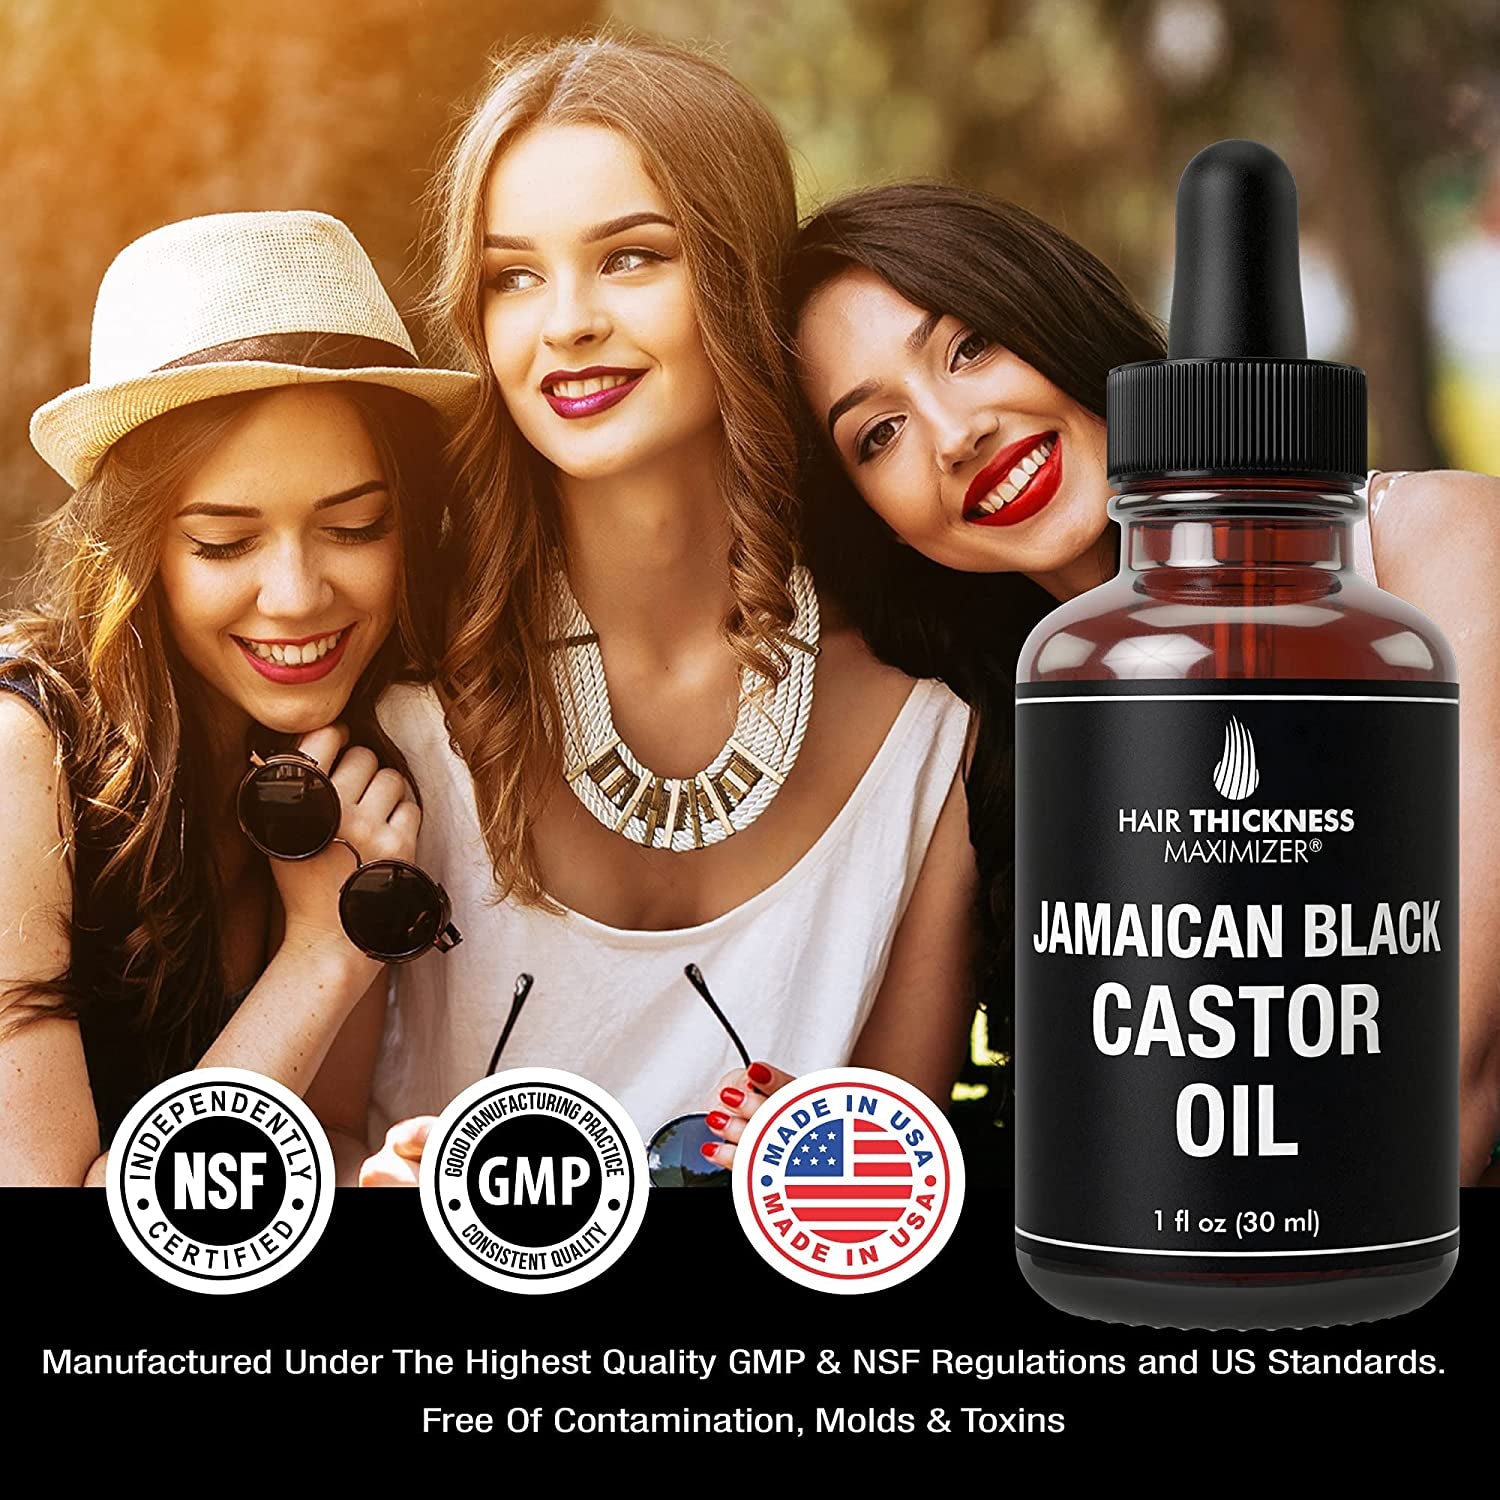 Jamaican Black Castor Oil for Hair Growth. Vegan Hair Growth Serum and Lash Serum for Hair Thickening, Moisturizing + Eyelash. Scalp Treatment for Women, Men with Dry, Frizzy, Weak Hair, Hair Loss 1Oz